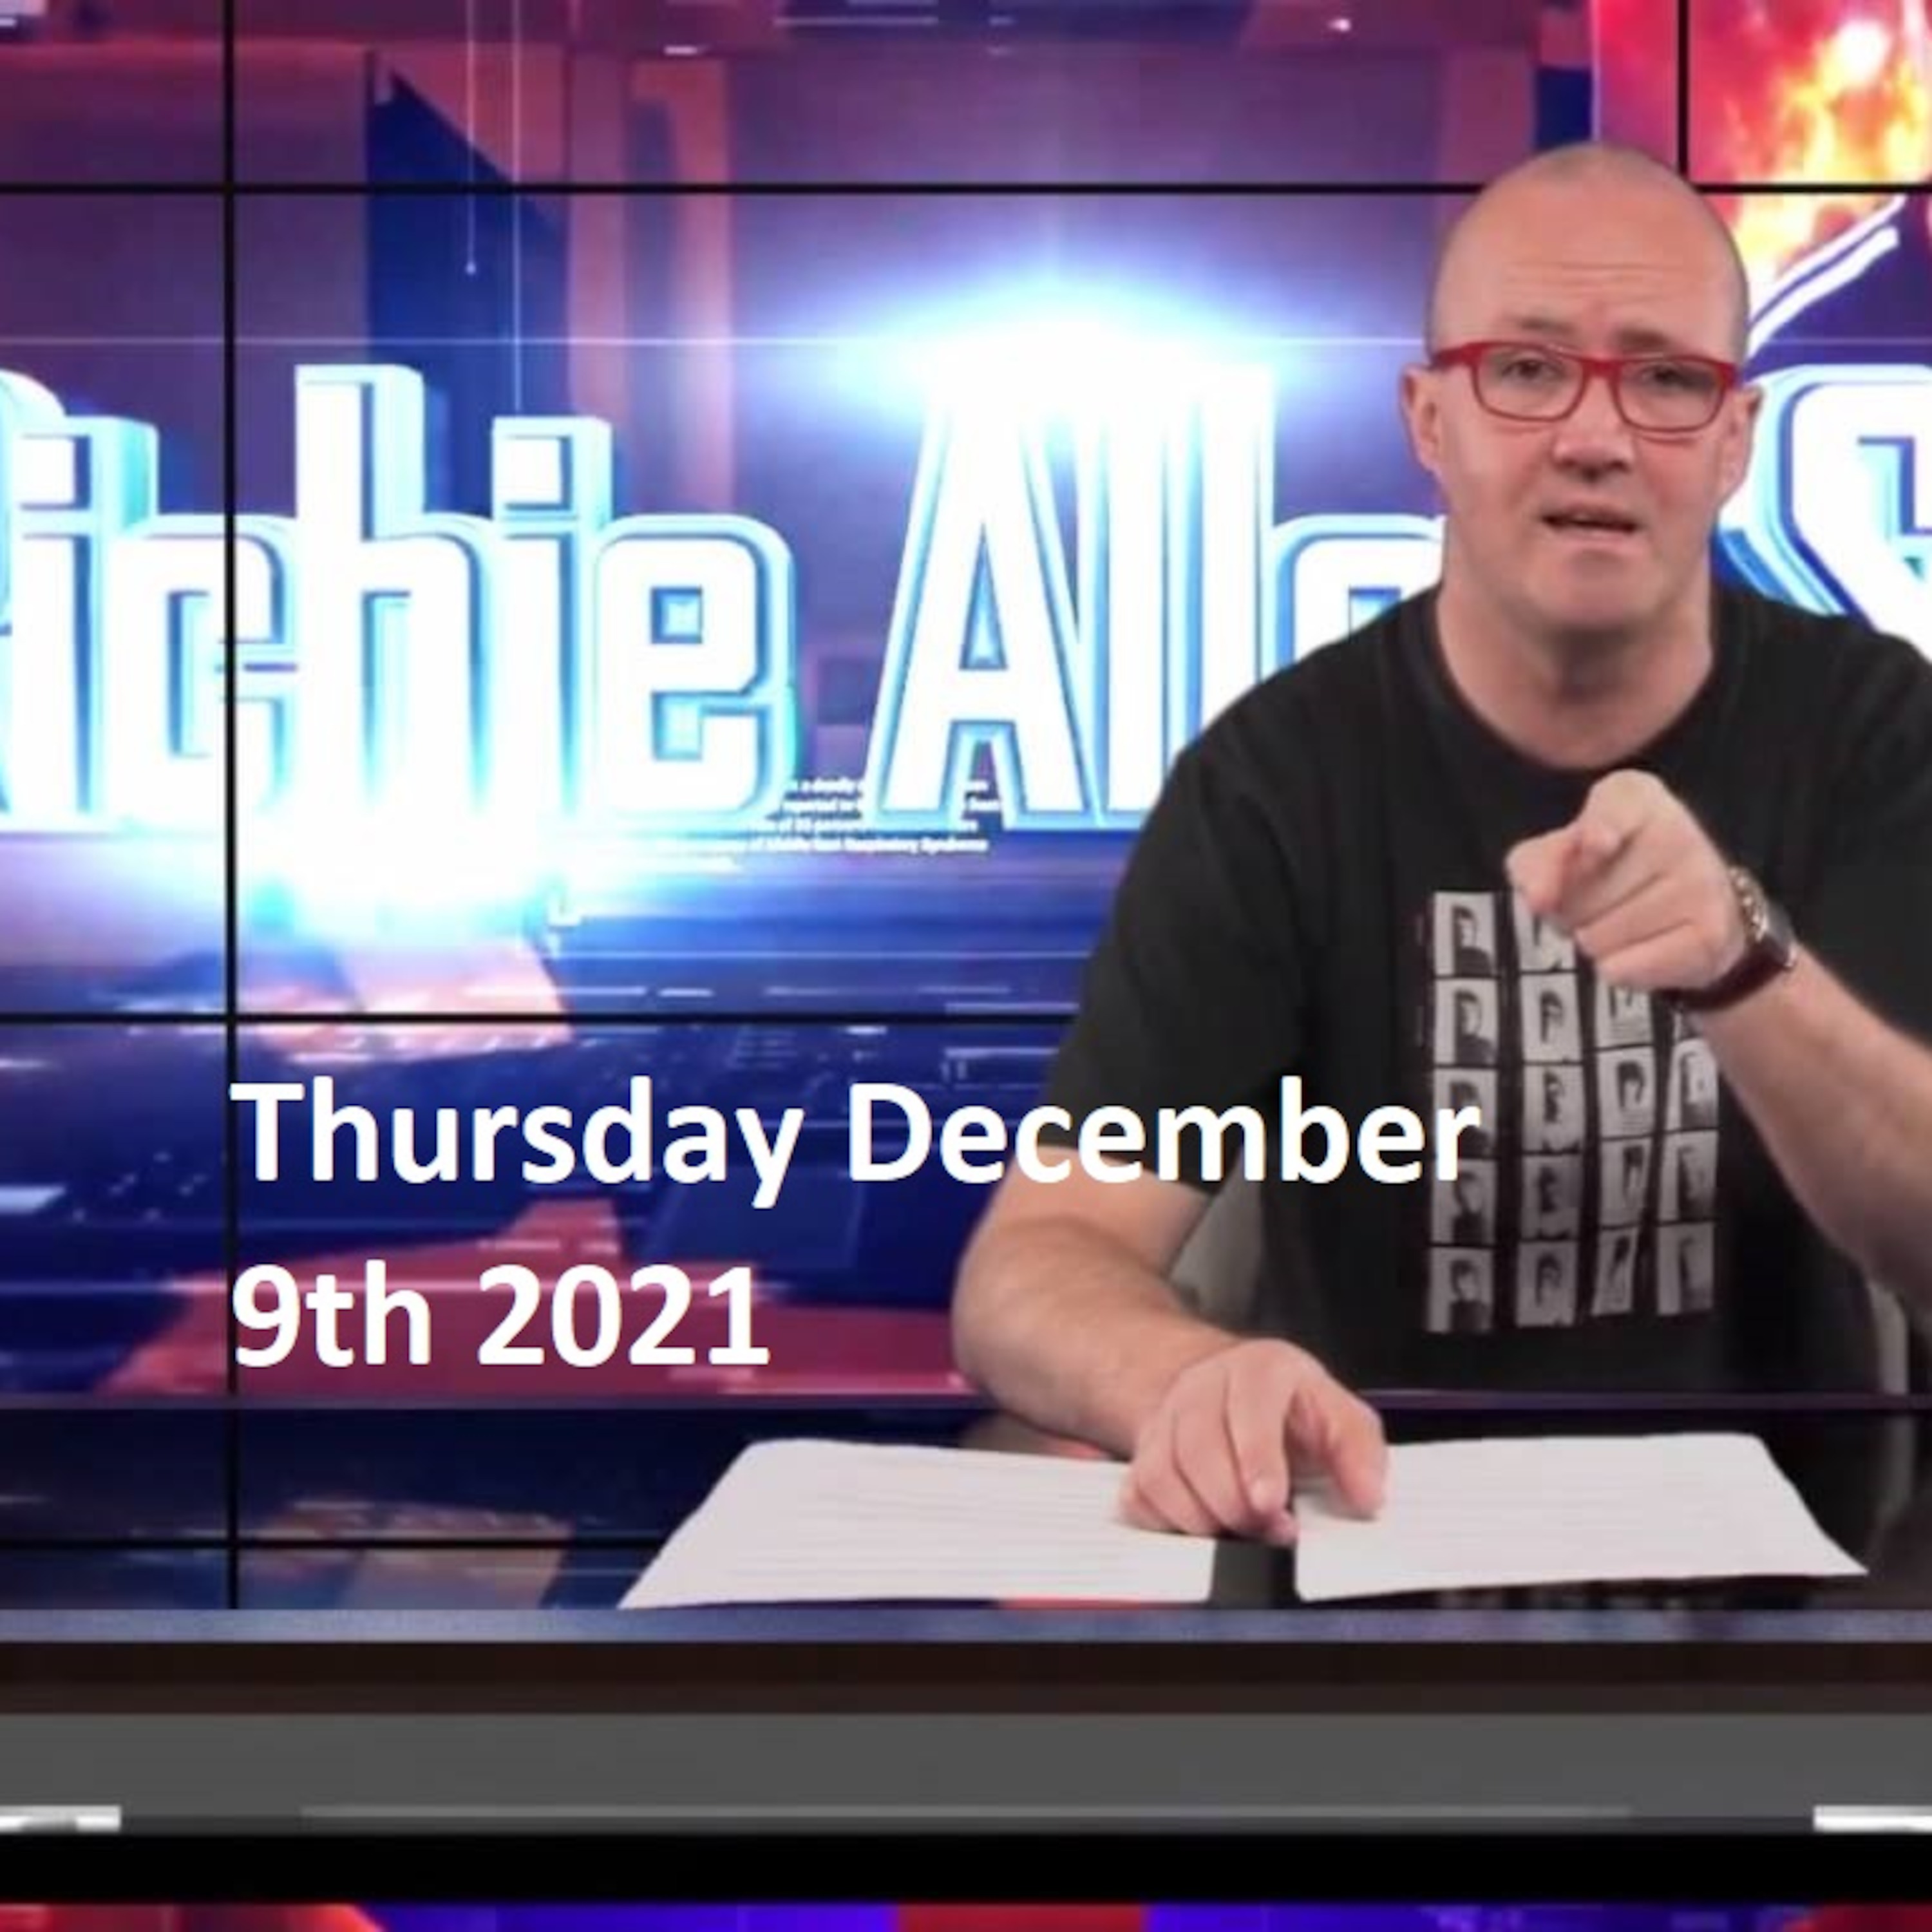 Episode 1378: The Richie Allen Show Thursday December 9th 2021